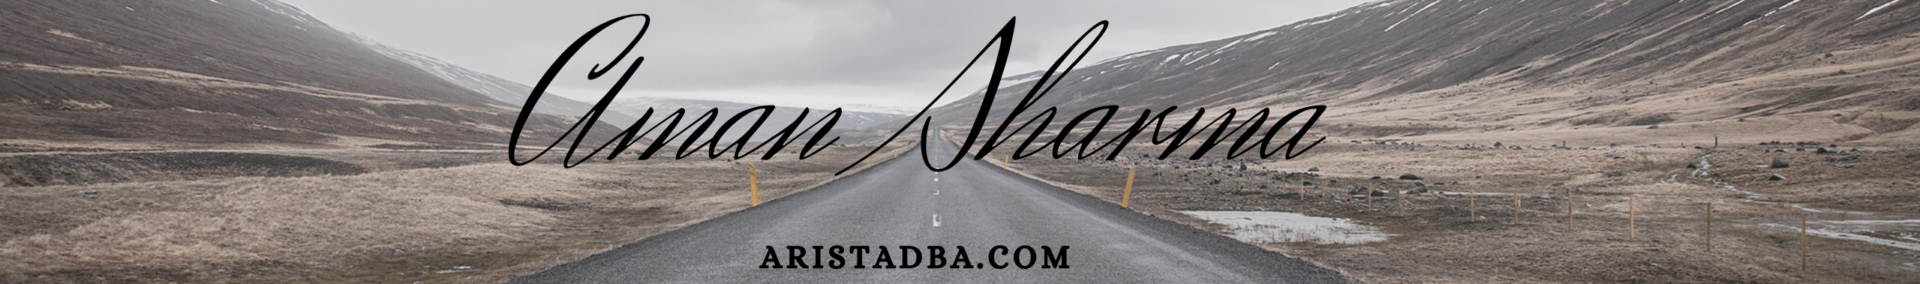 AristaDBA's Oracle Blog....